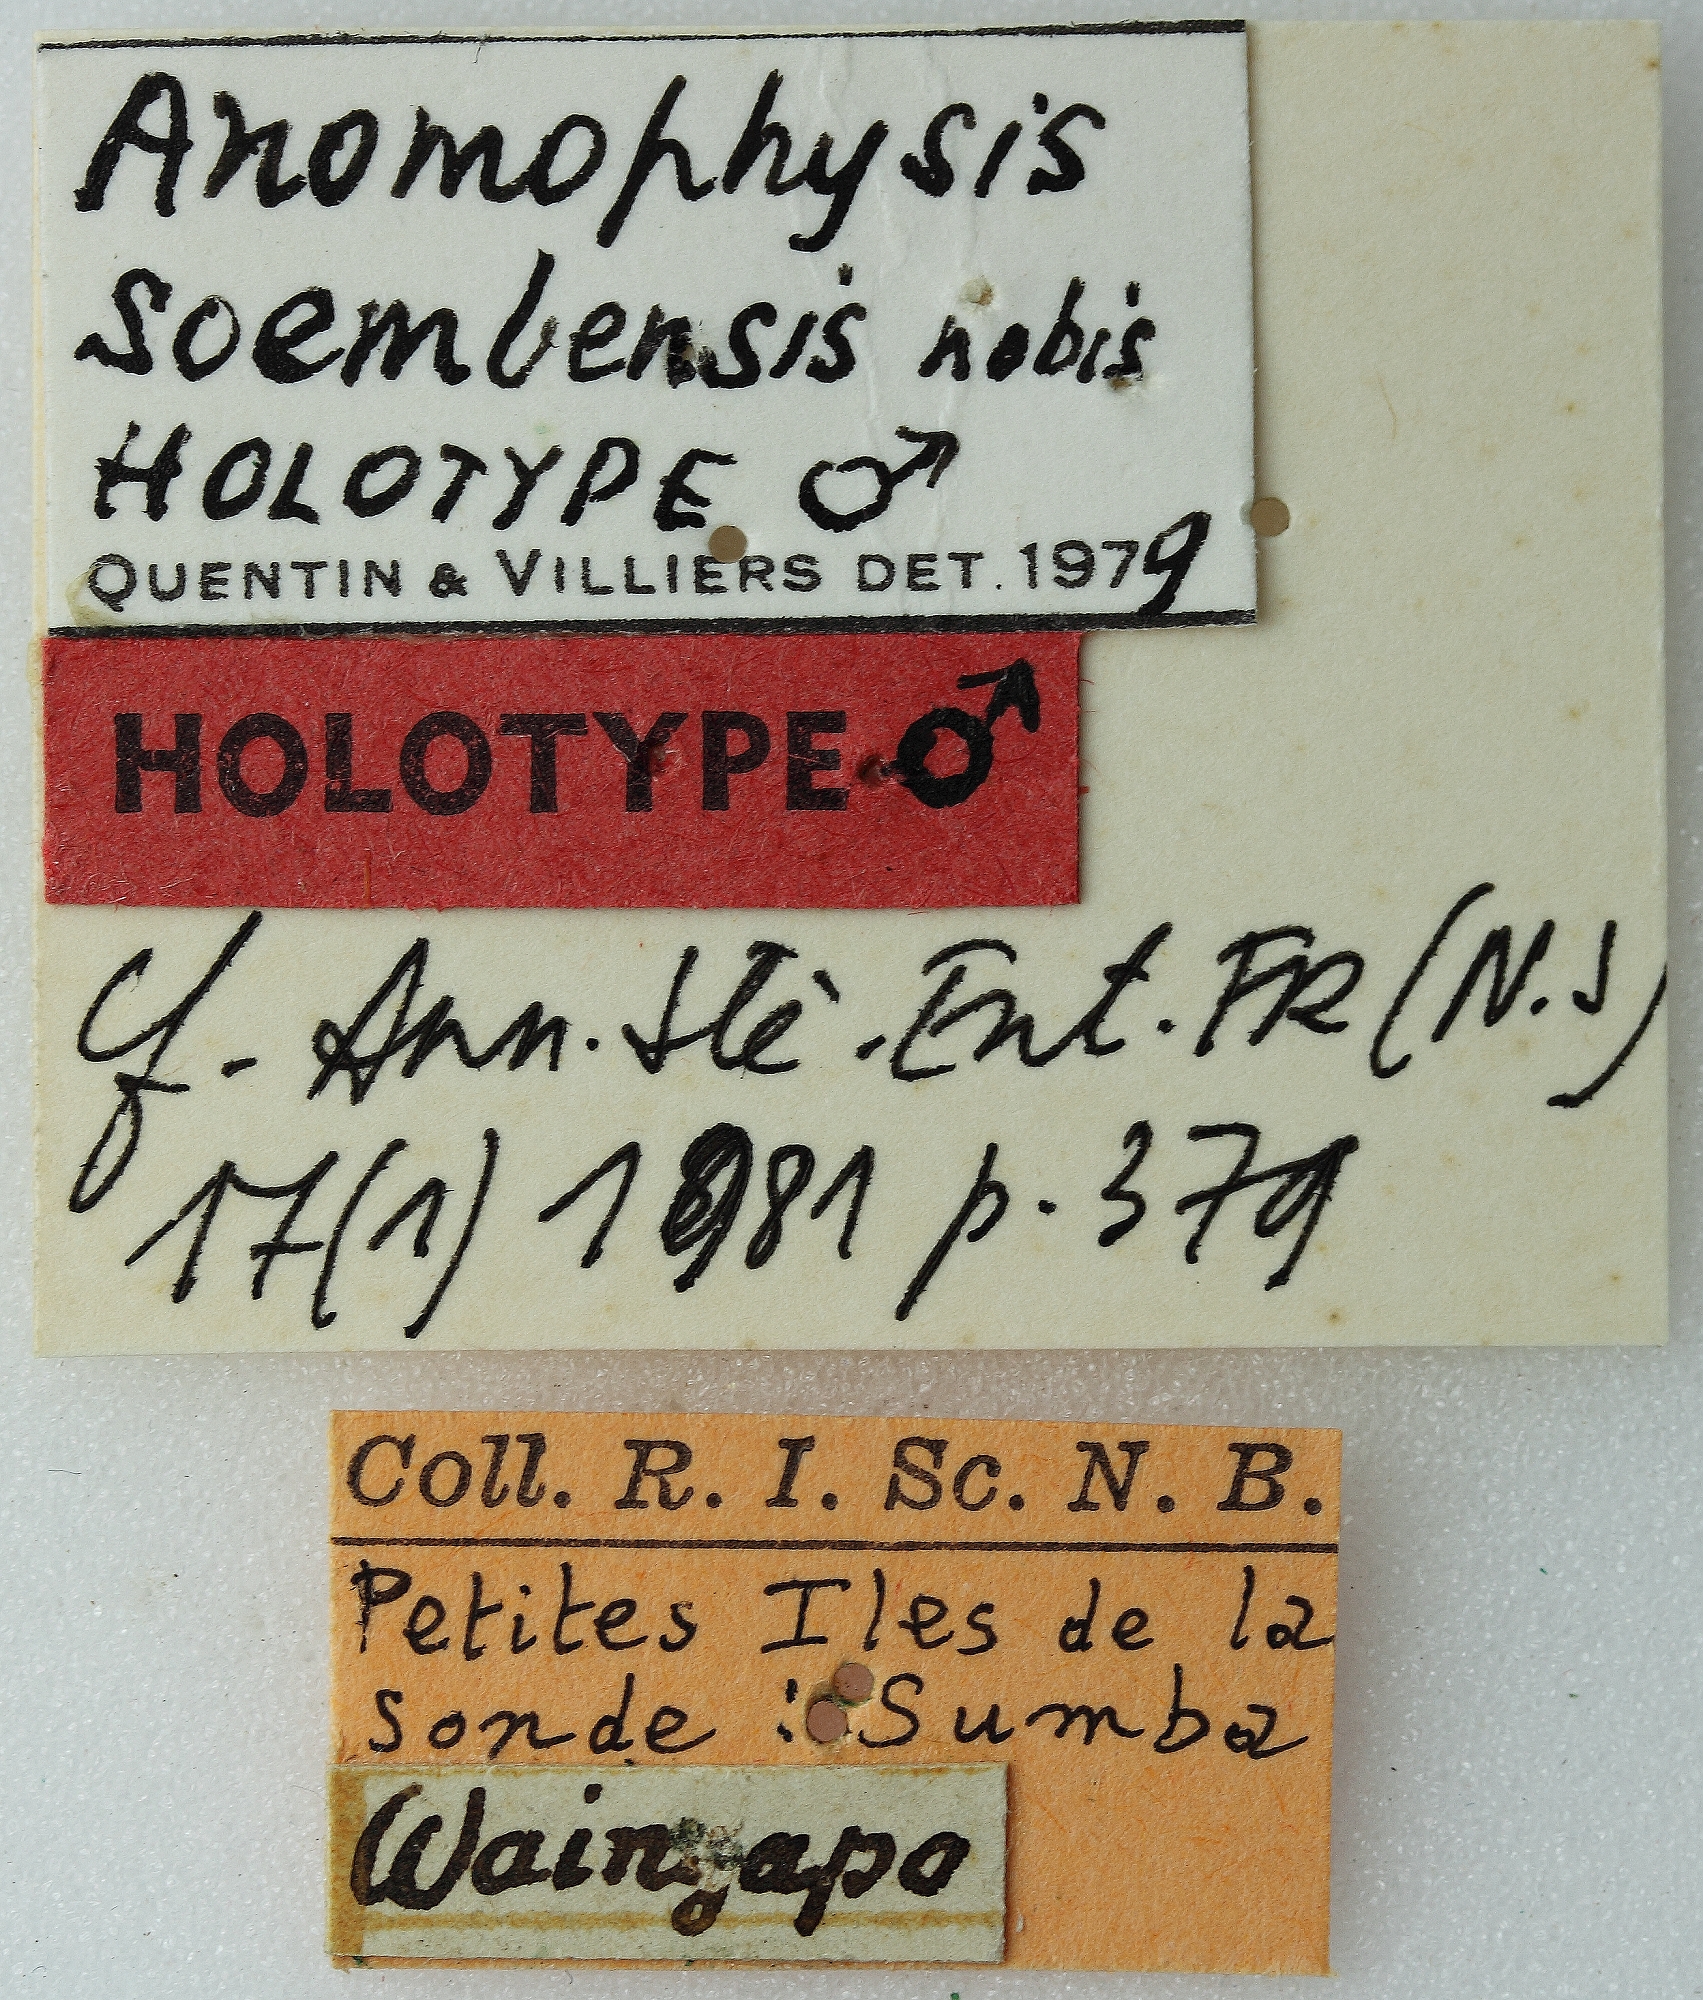 Anomophysis soembensis 01 00 Holotype M 073 BRUS 201405.jpg